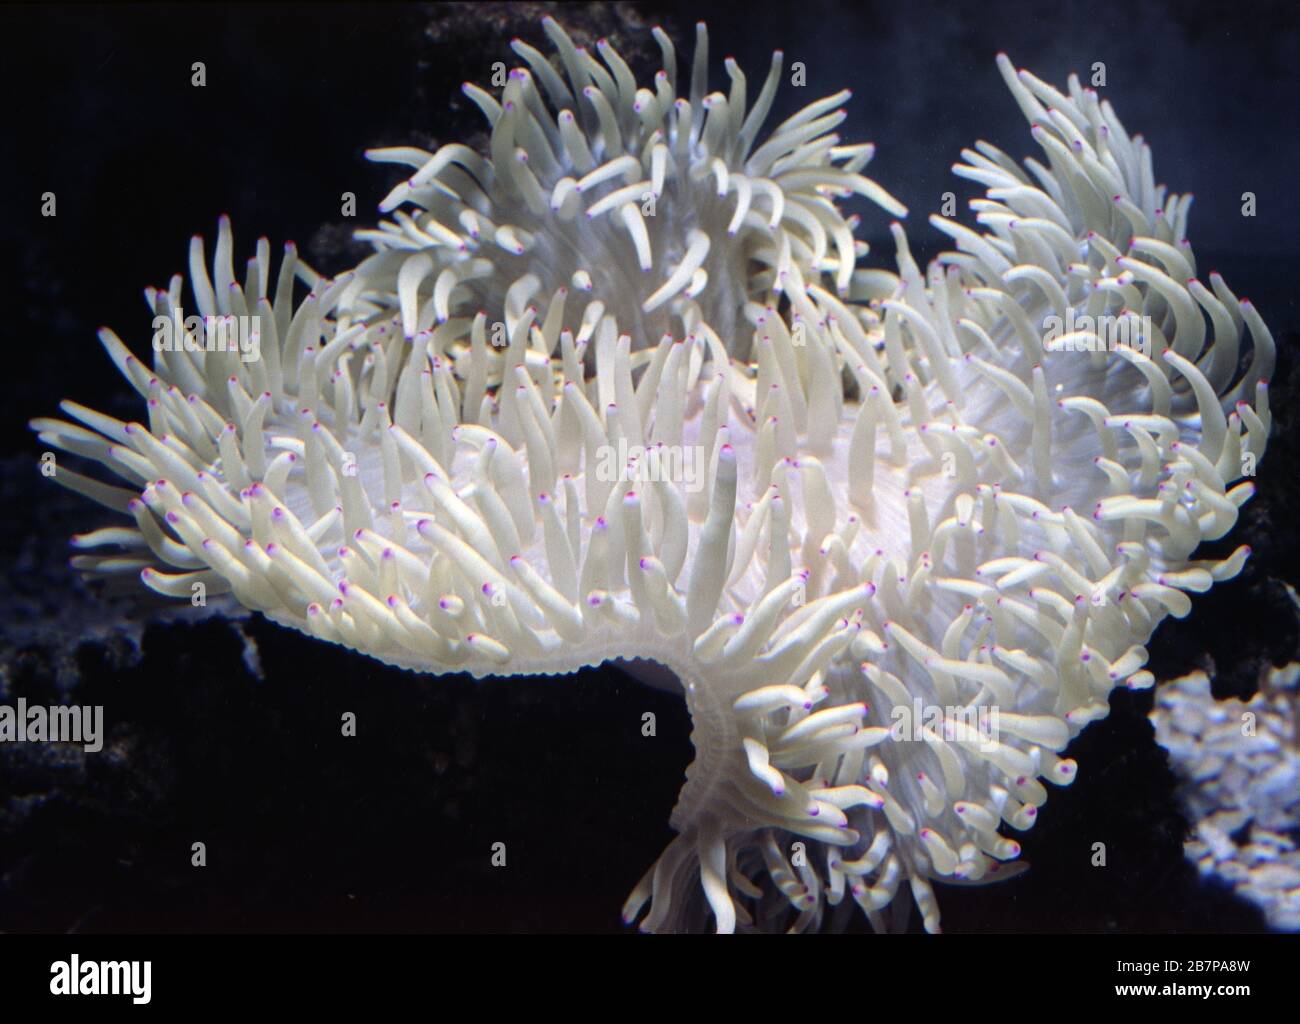 Sebae or leathery sea anemone, Heteractis crispa Stock Photo